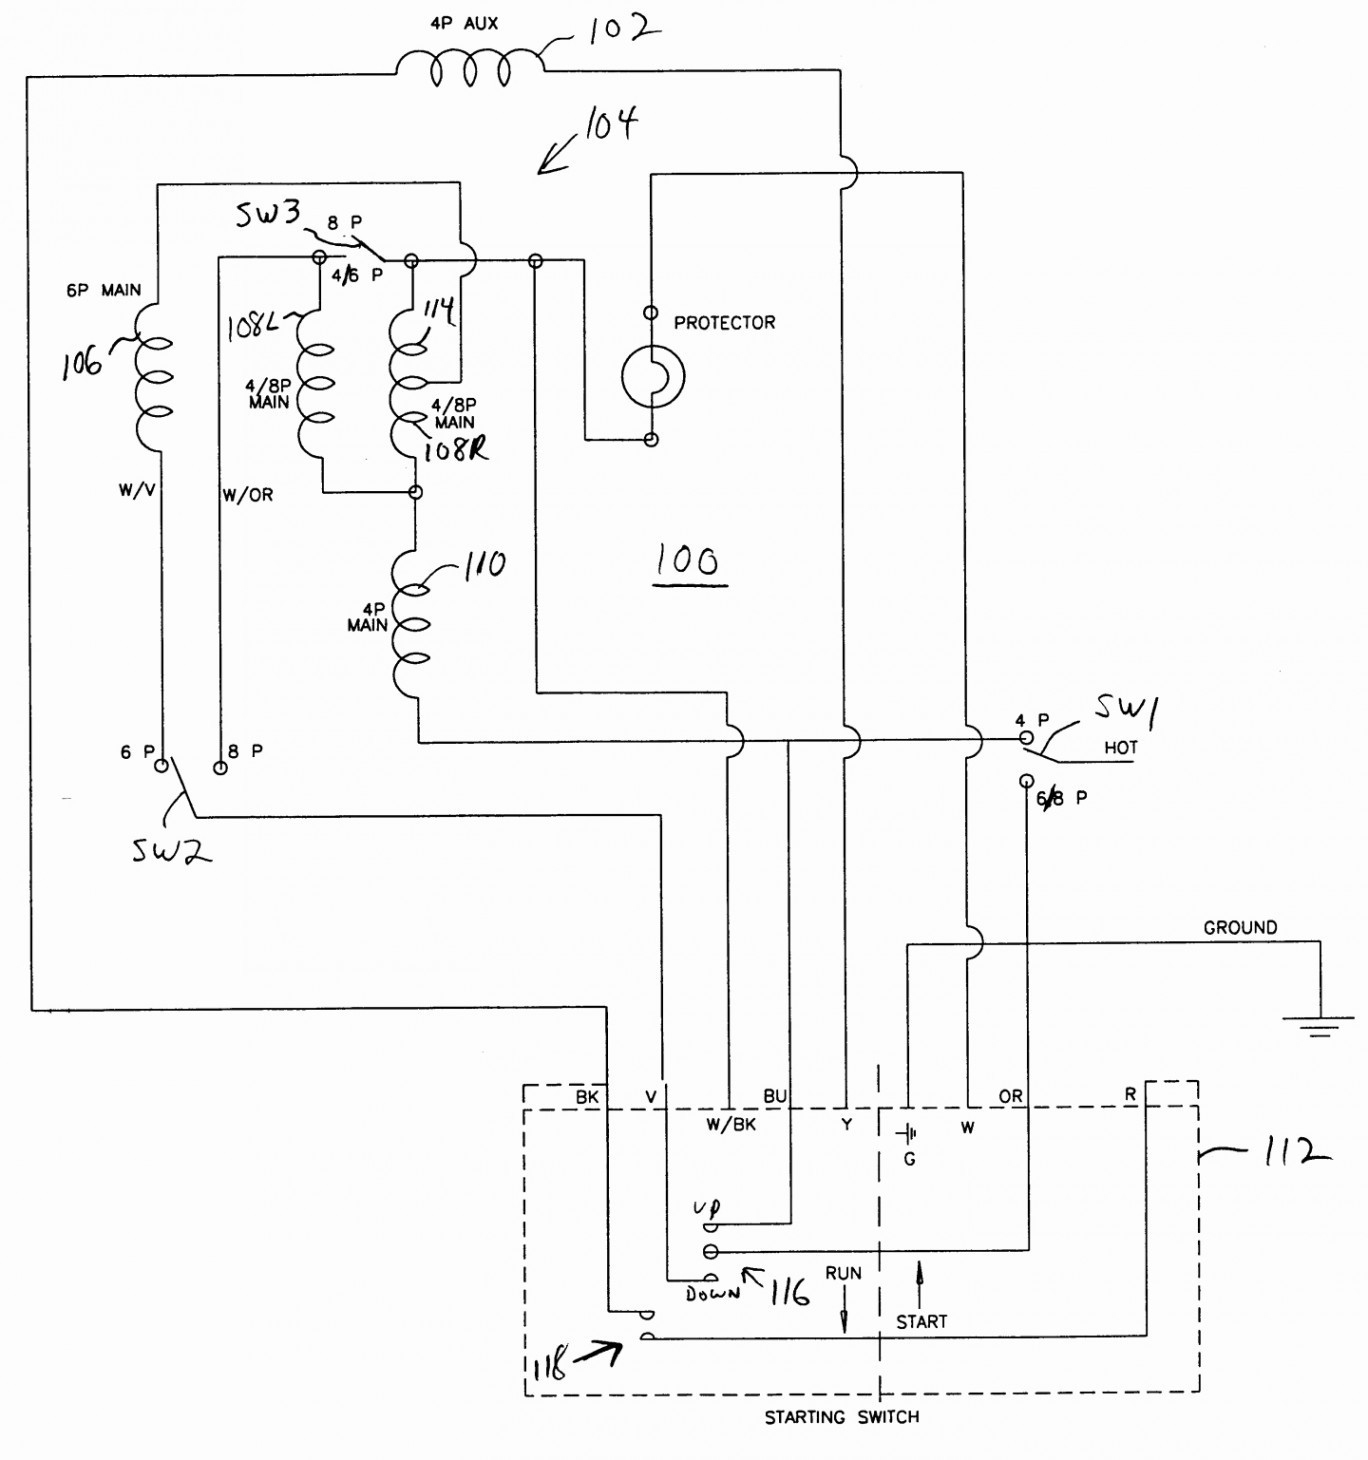 Century Ac Motor Wiring Diagram 115 230 Volts | Manual E-Books - Century Ac Motor Wiring Diagram 115 230 Volts